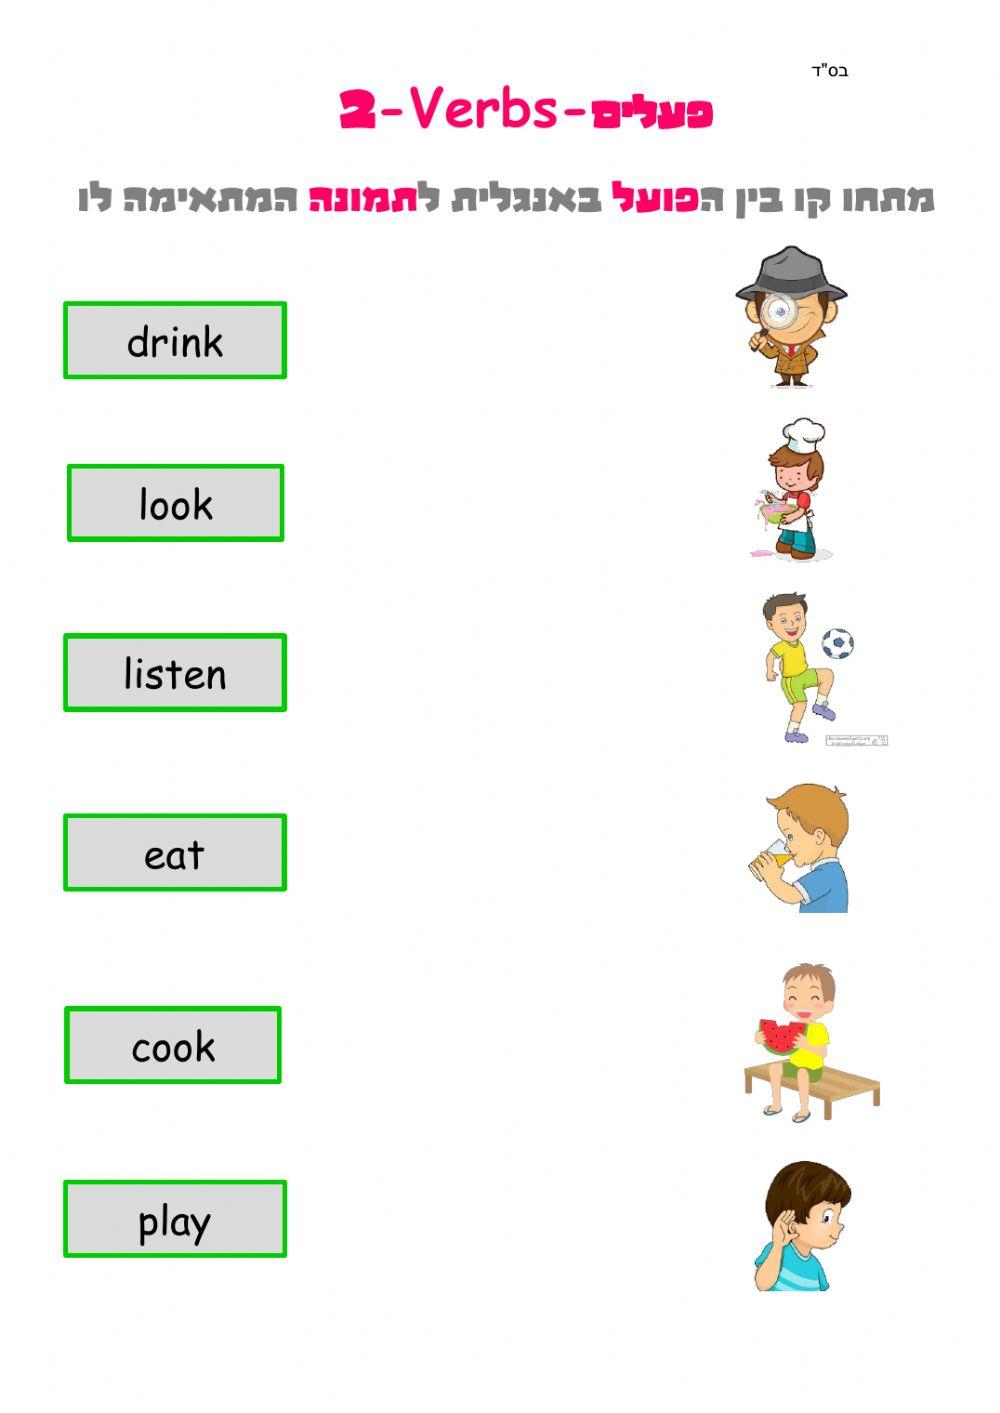 Basic verbs-2